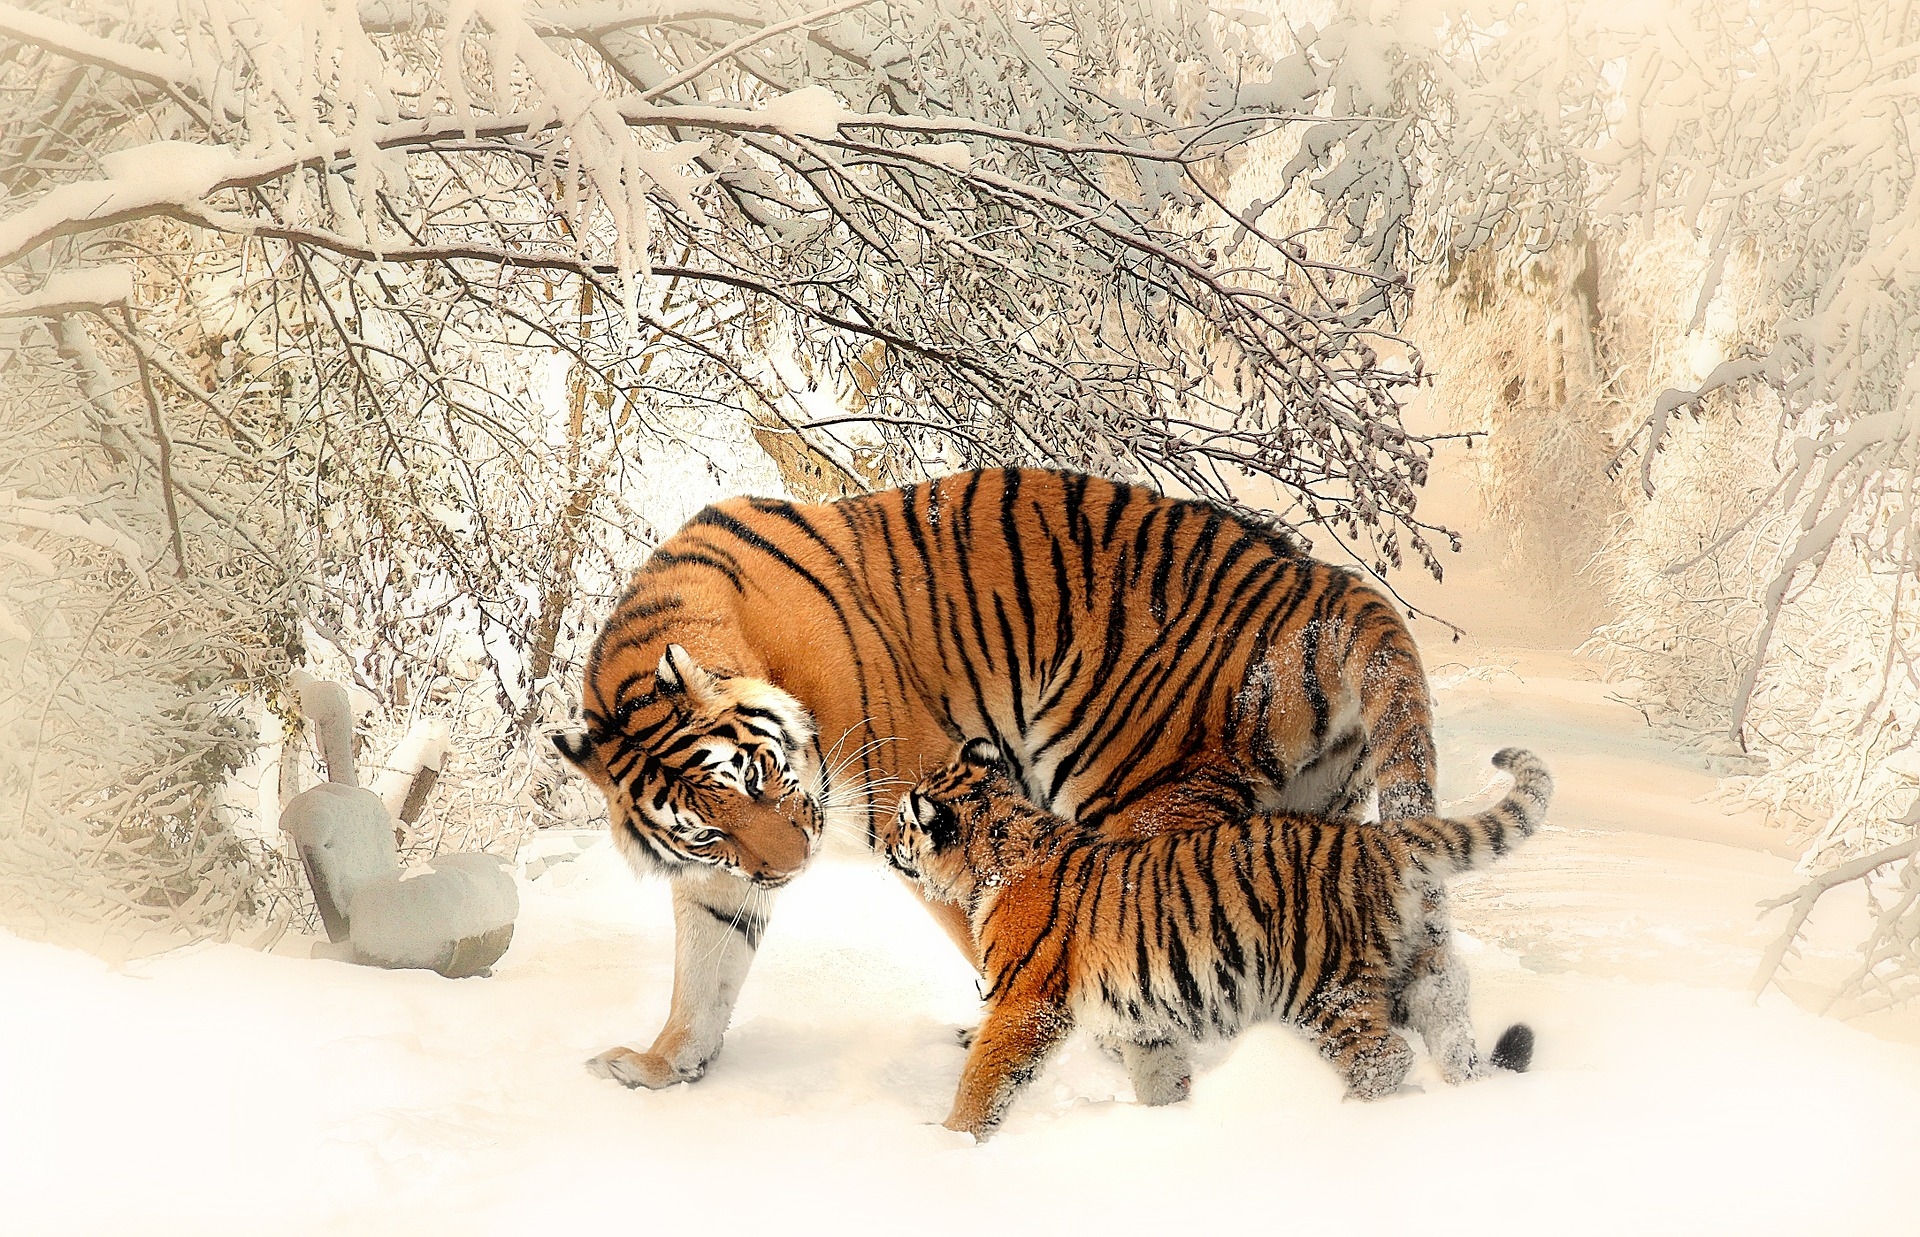 https://pixabay.com/hu/tigris-tigris-baby-tigerfamile-591359/